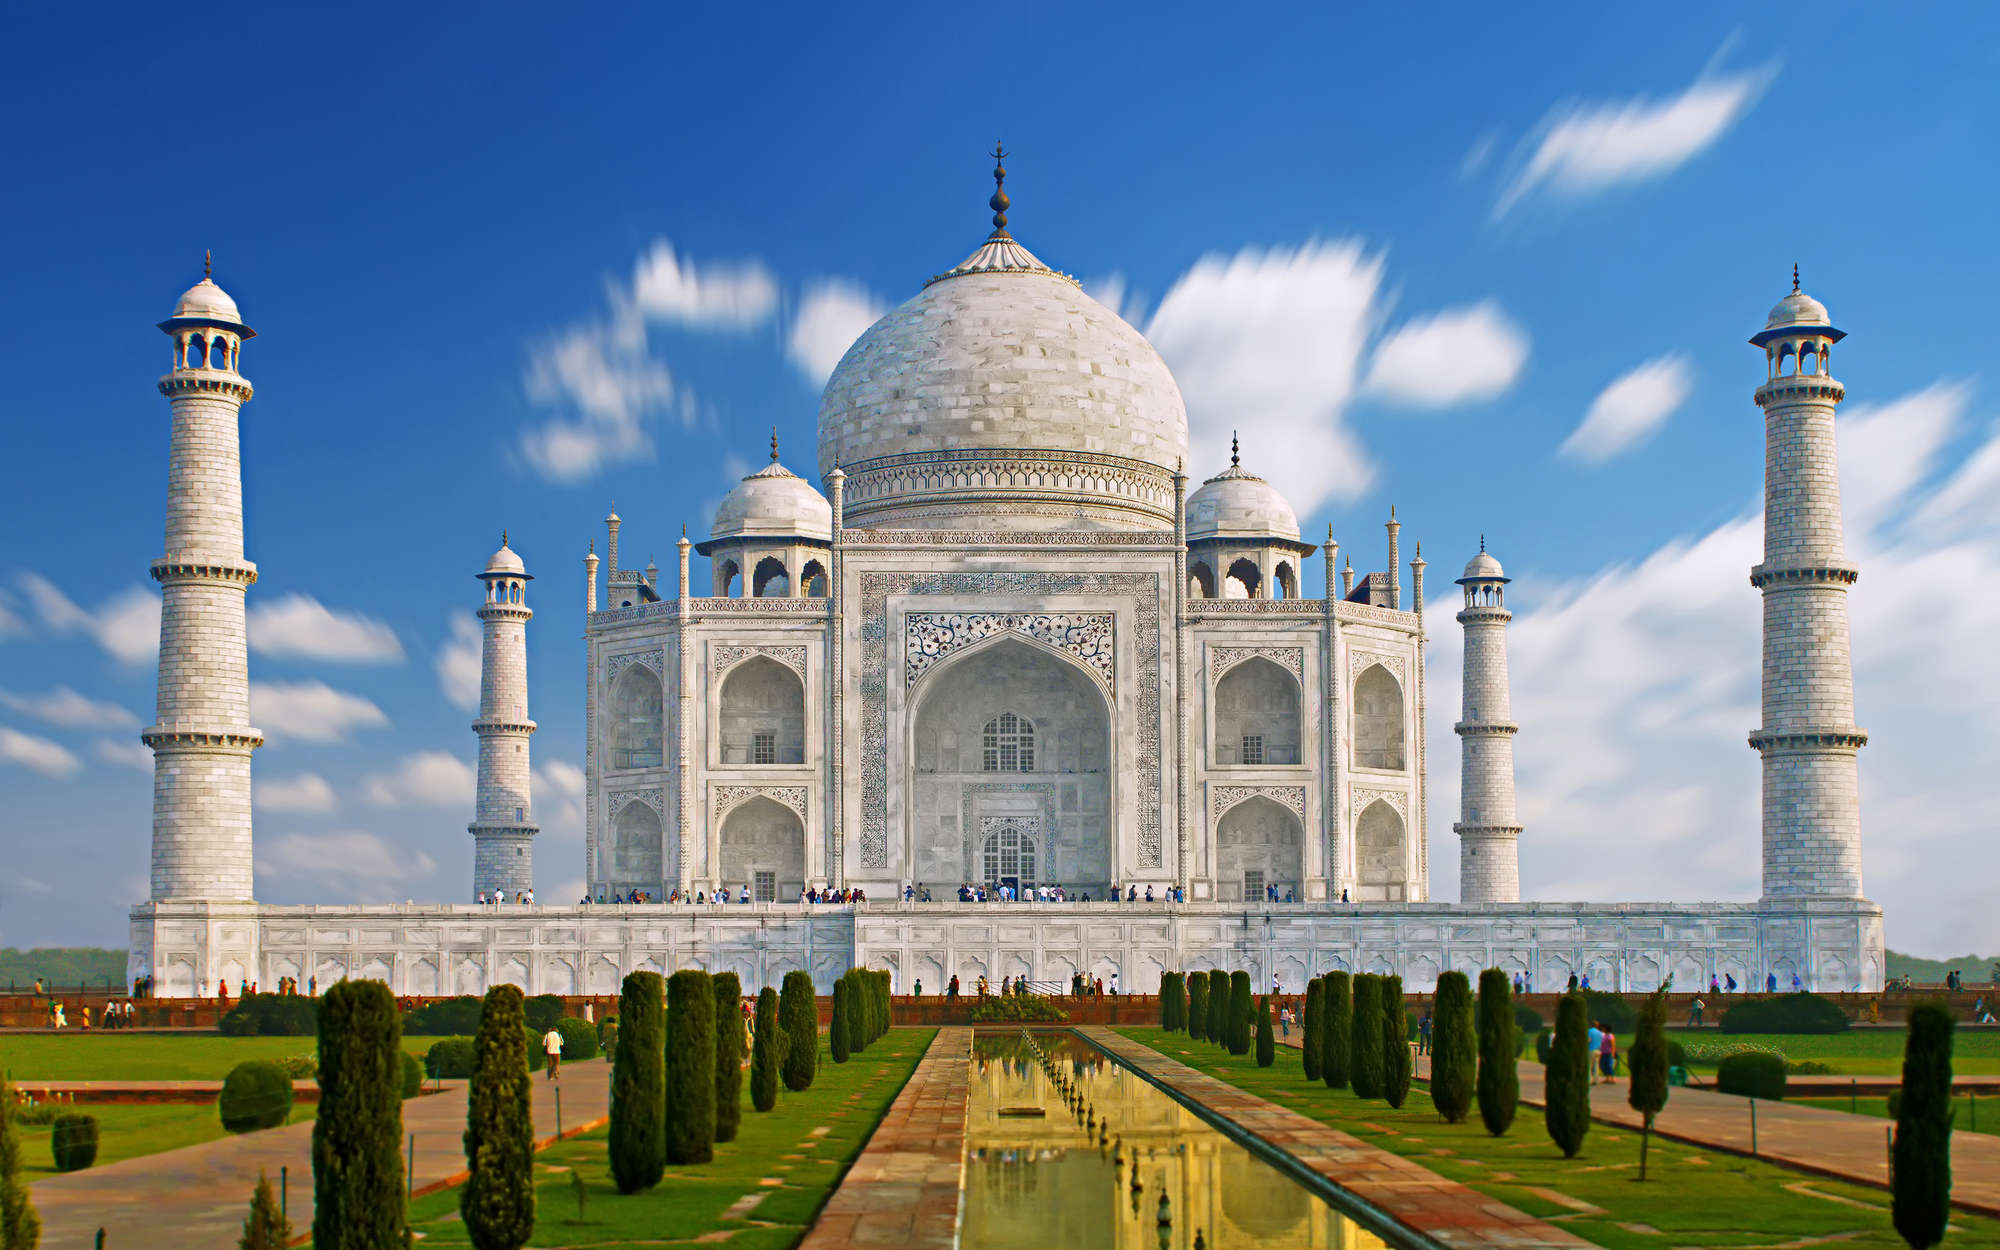             Fotomurali Taj Mahal in Turchia - Vello liscio premium
        